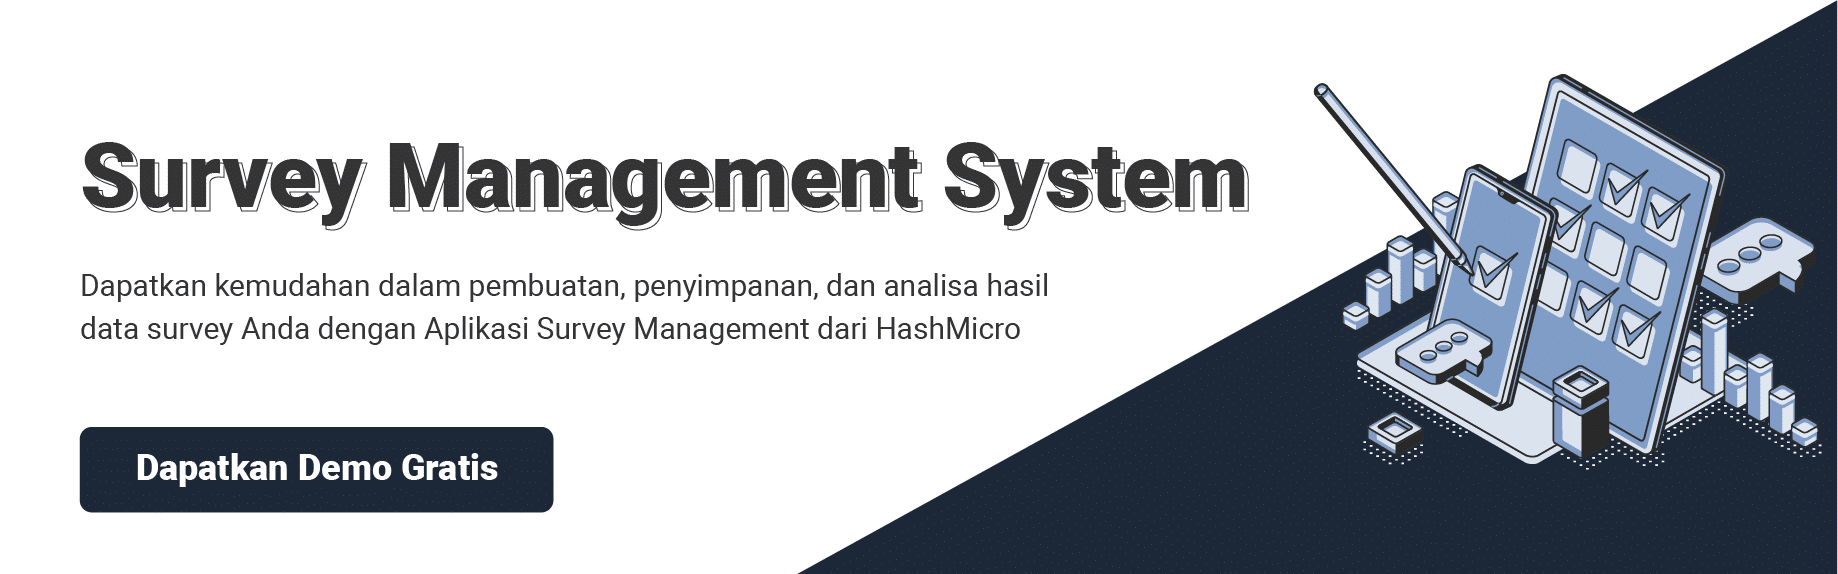 Survey Management System